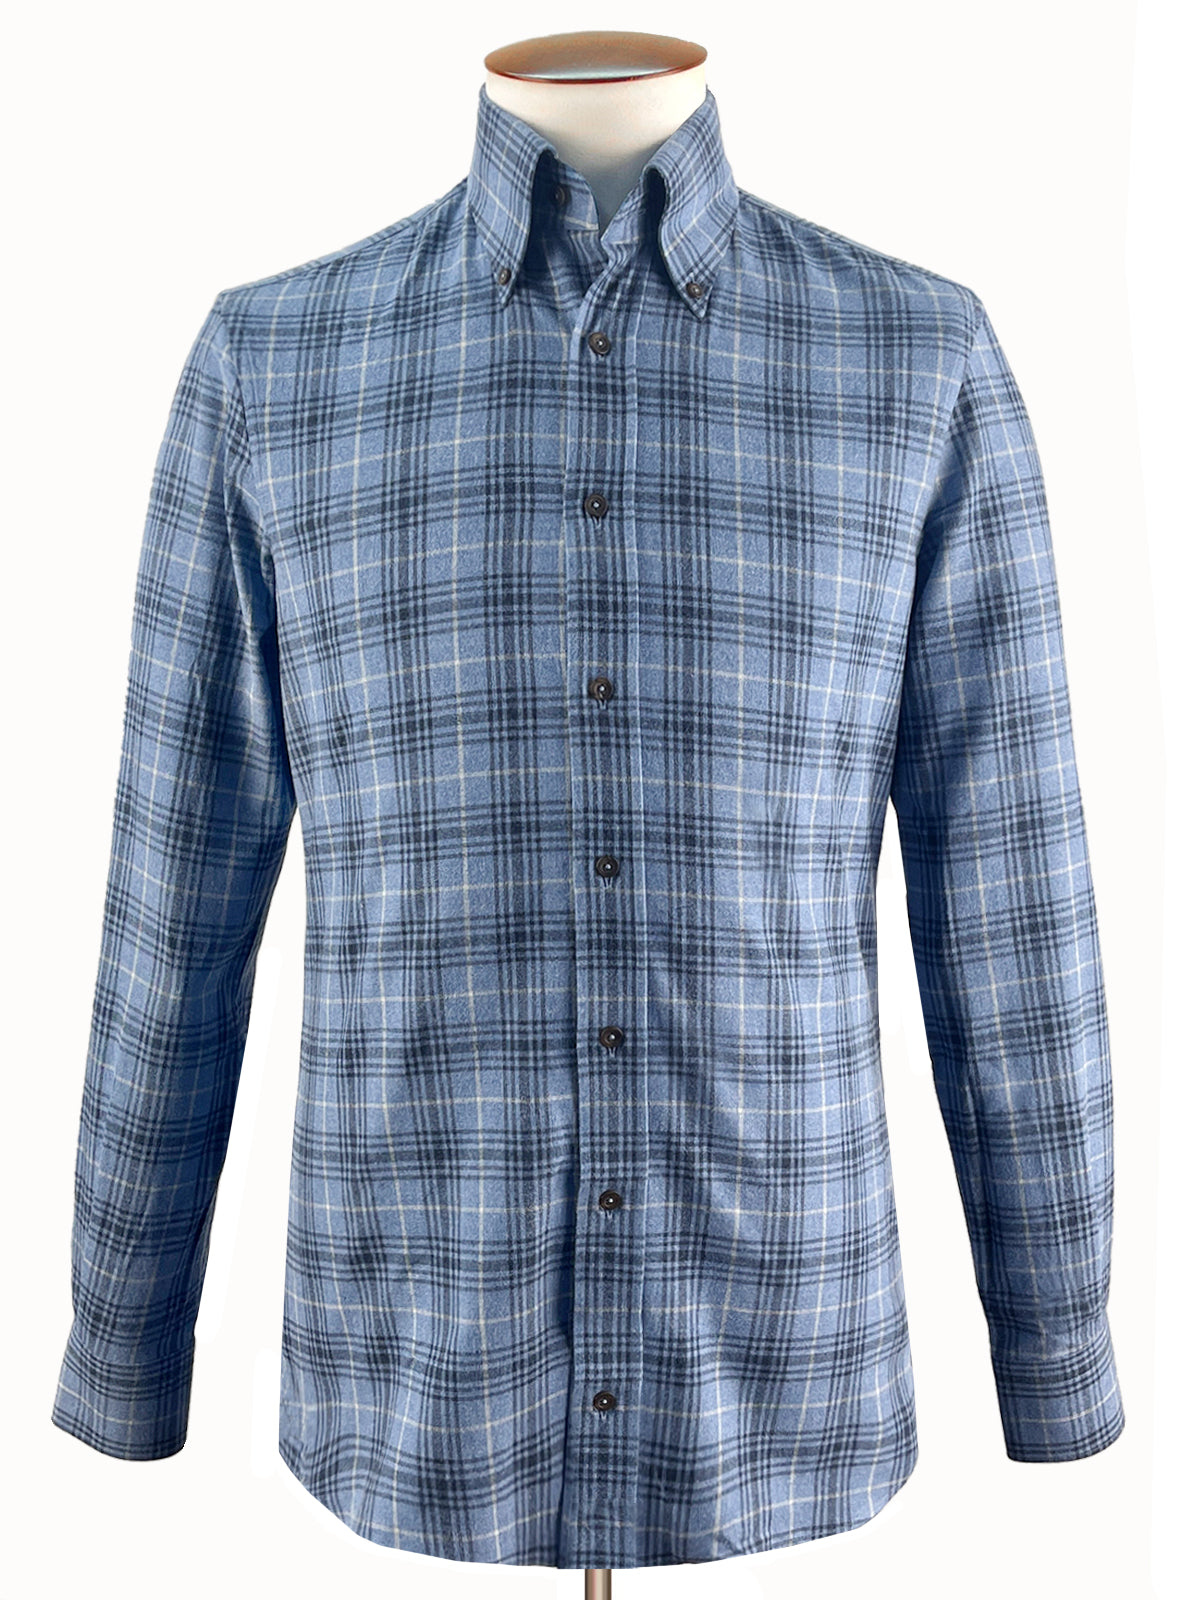 Mixed Blue Check Flannel Button Down Shirt